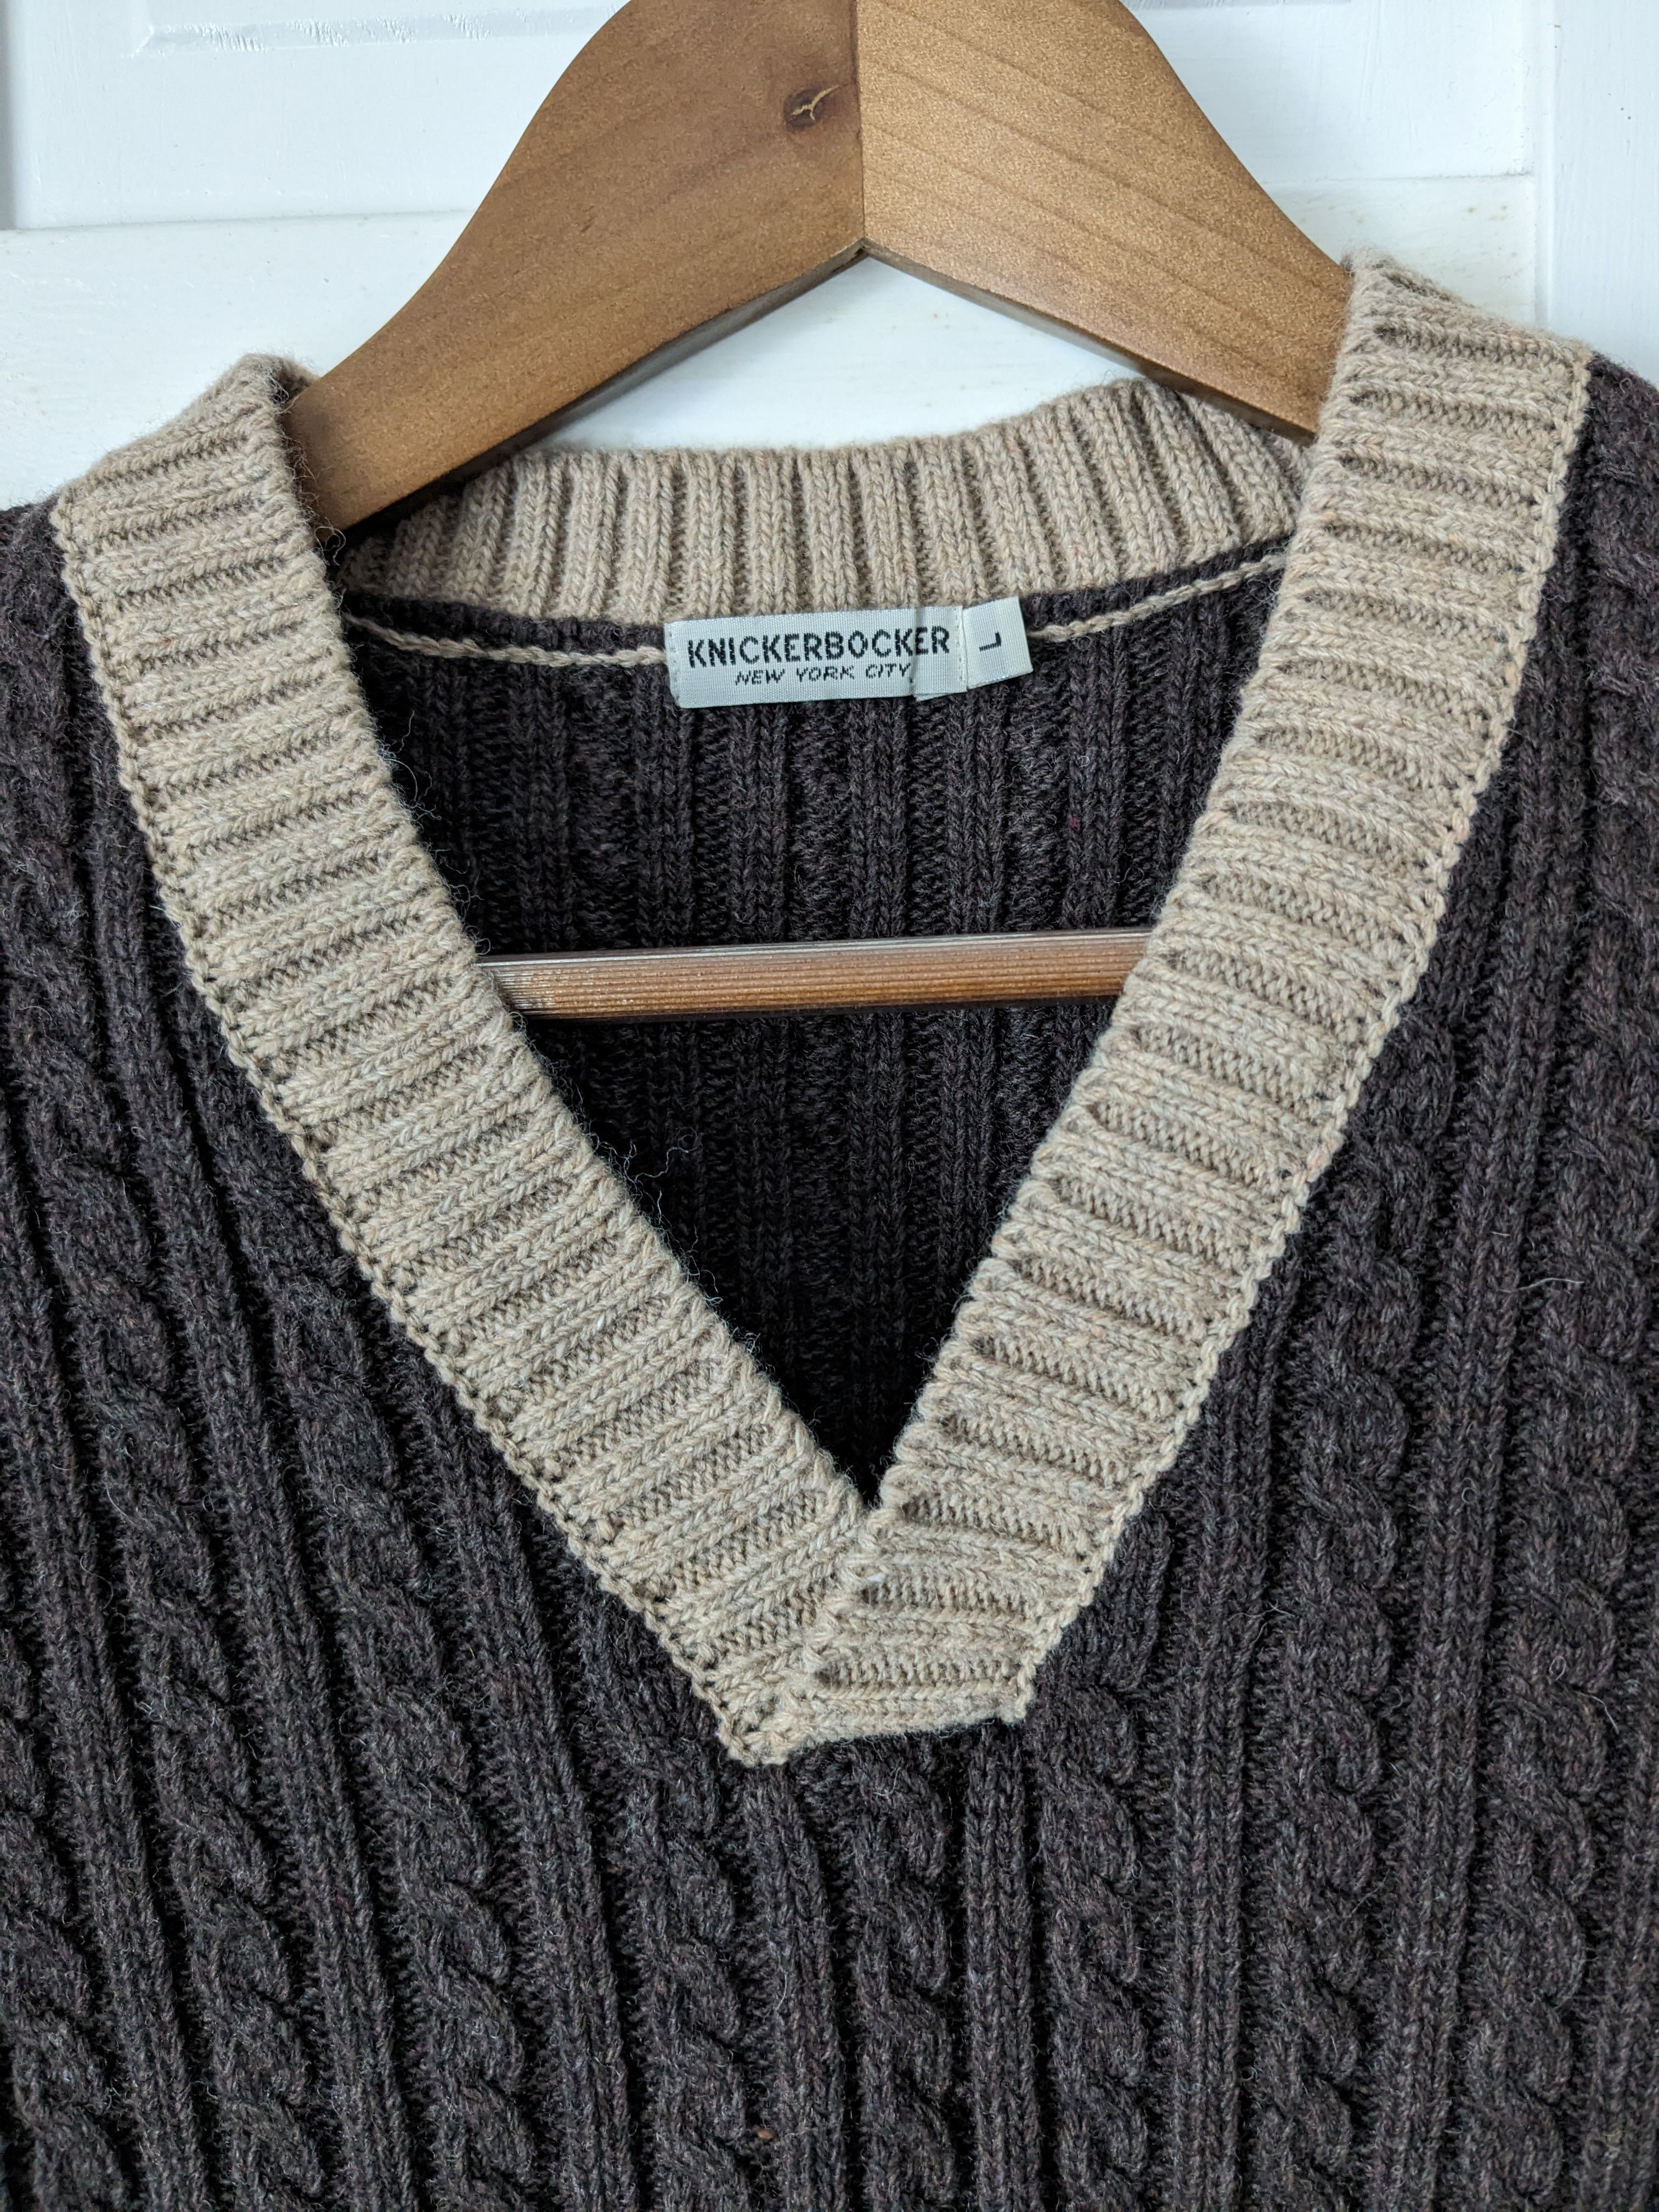 Knickerbocker Mfg Co Wool blend cable knit sweater vest Size US L / EU 52-54 / 3 - 3 Thumbnail